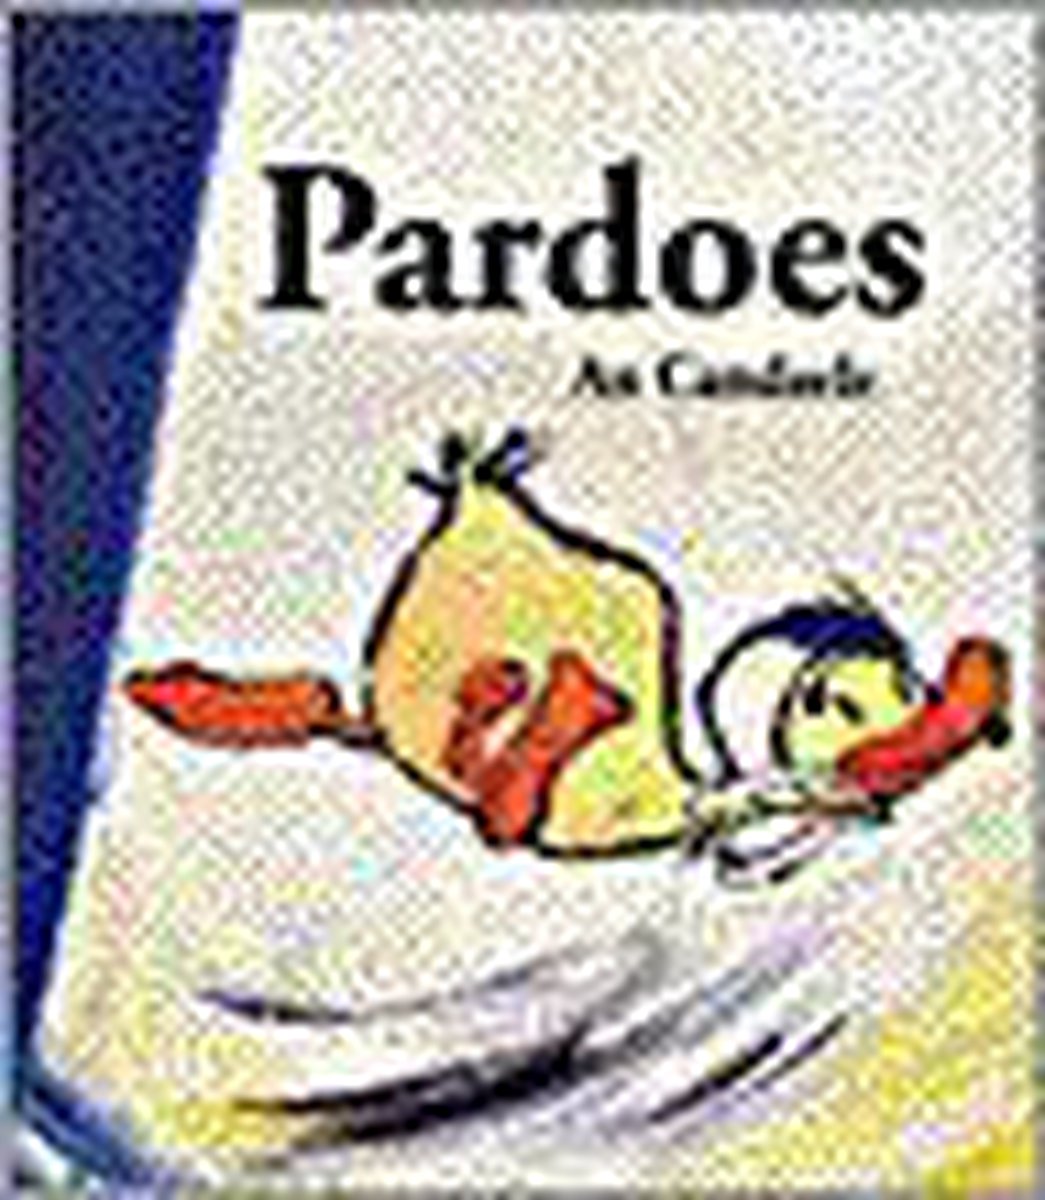 Pardoes - An Candaele